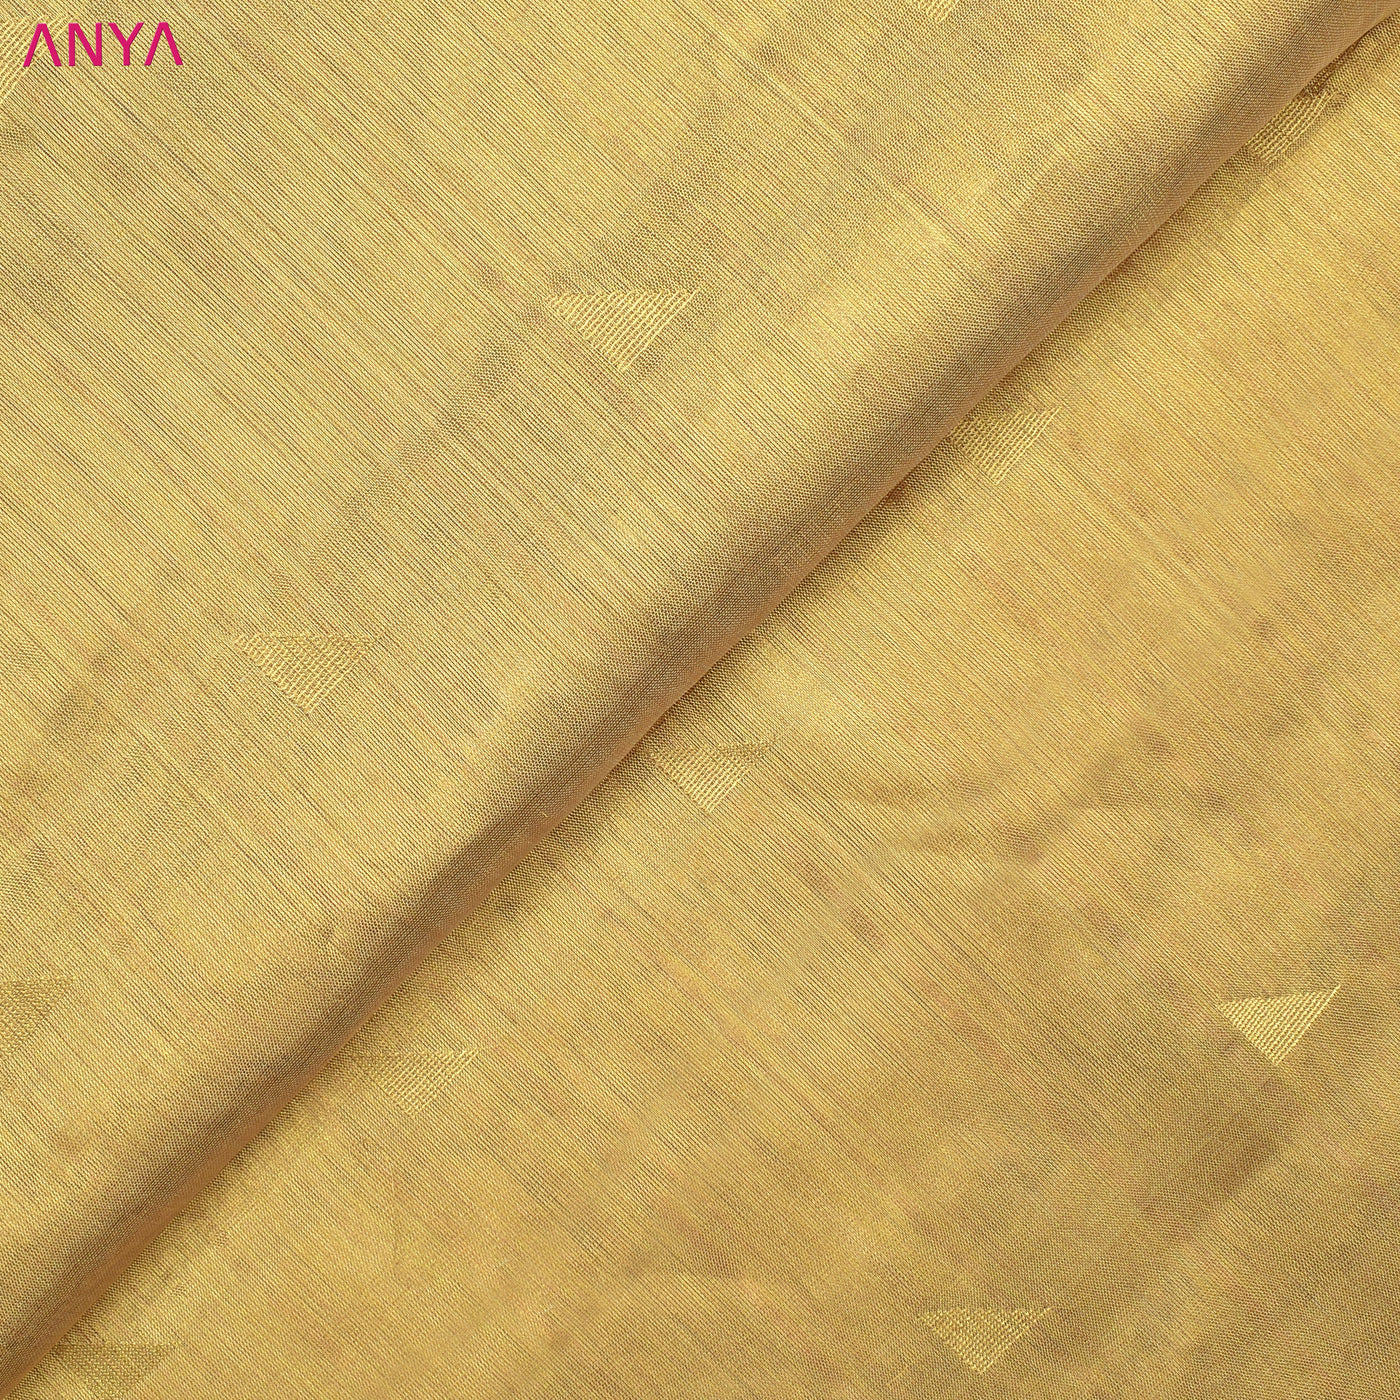 Anya Online golden-tissue-fabric